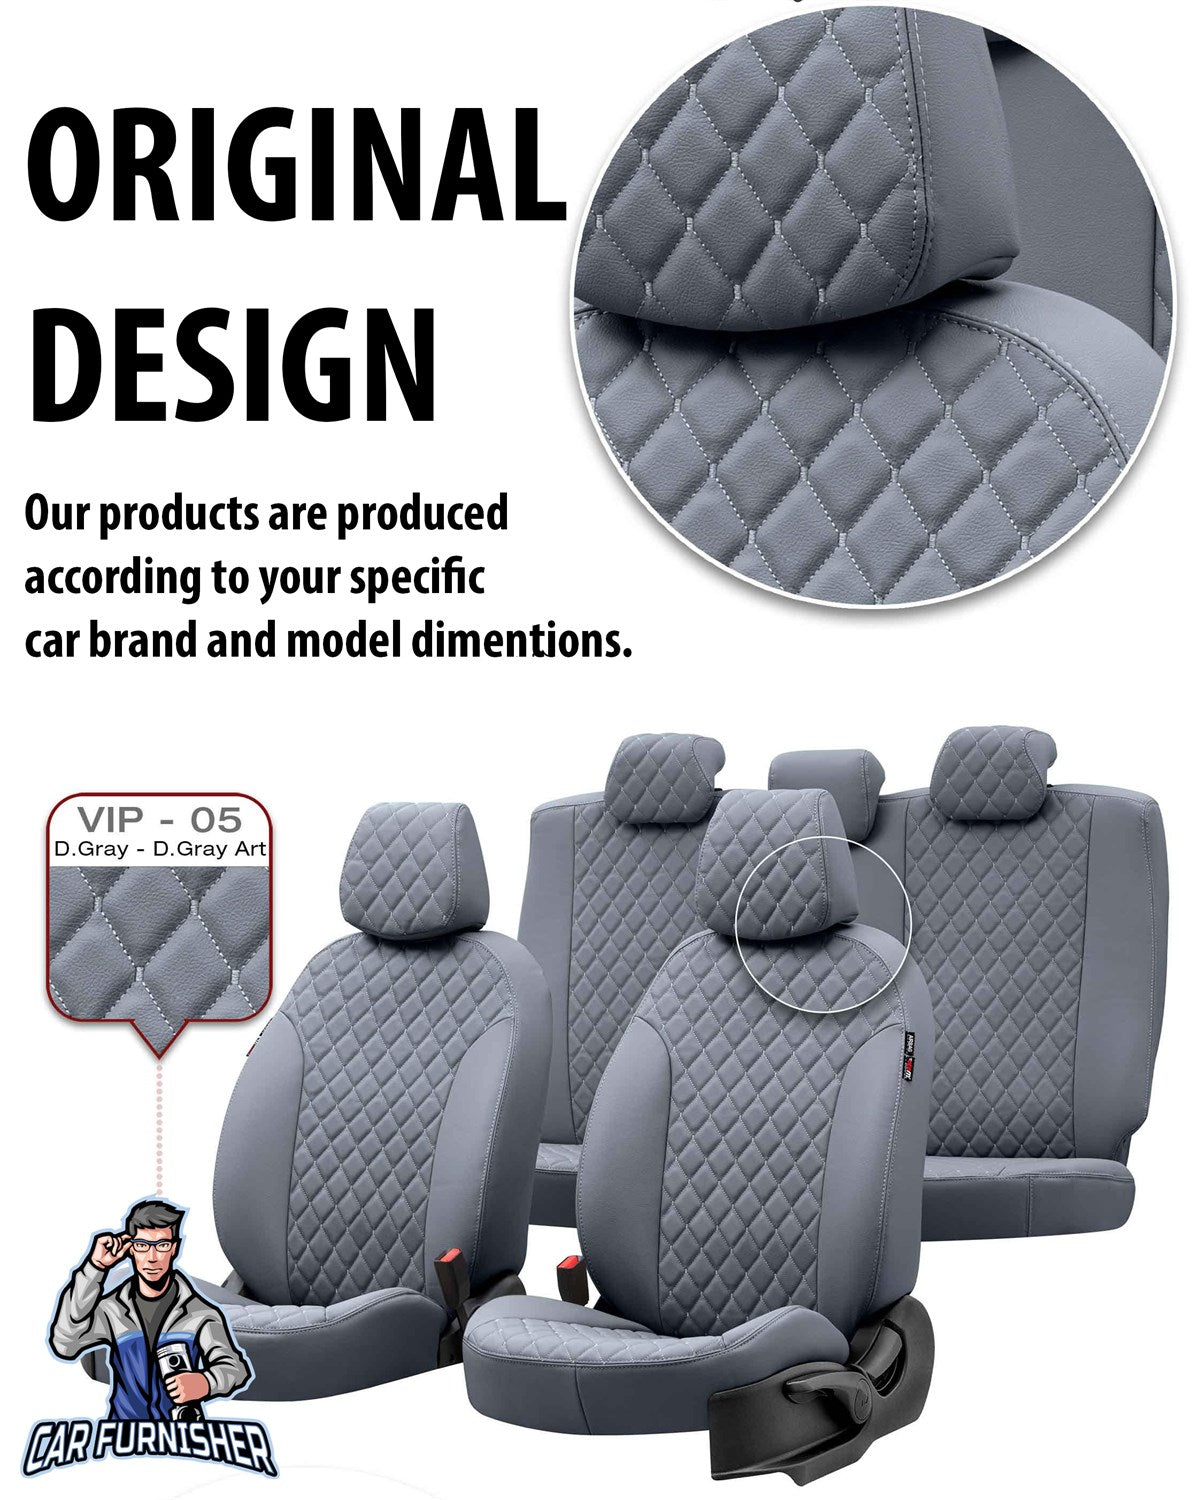 Kia Soul Seat Covers Madrid Leather Design Blue Leather